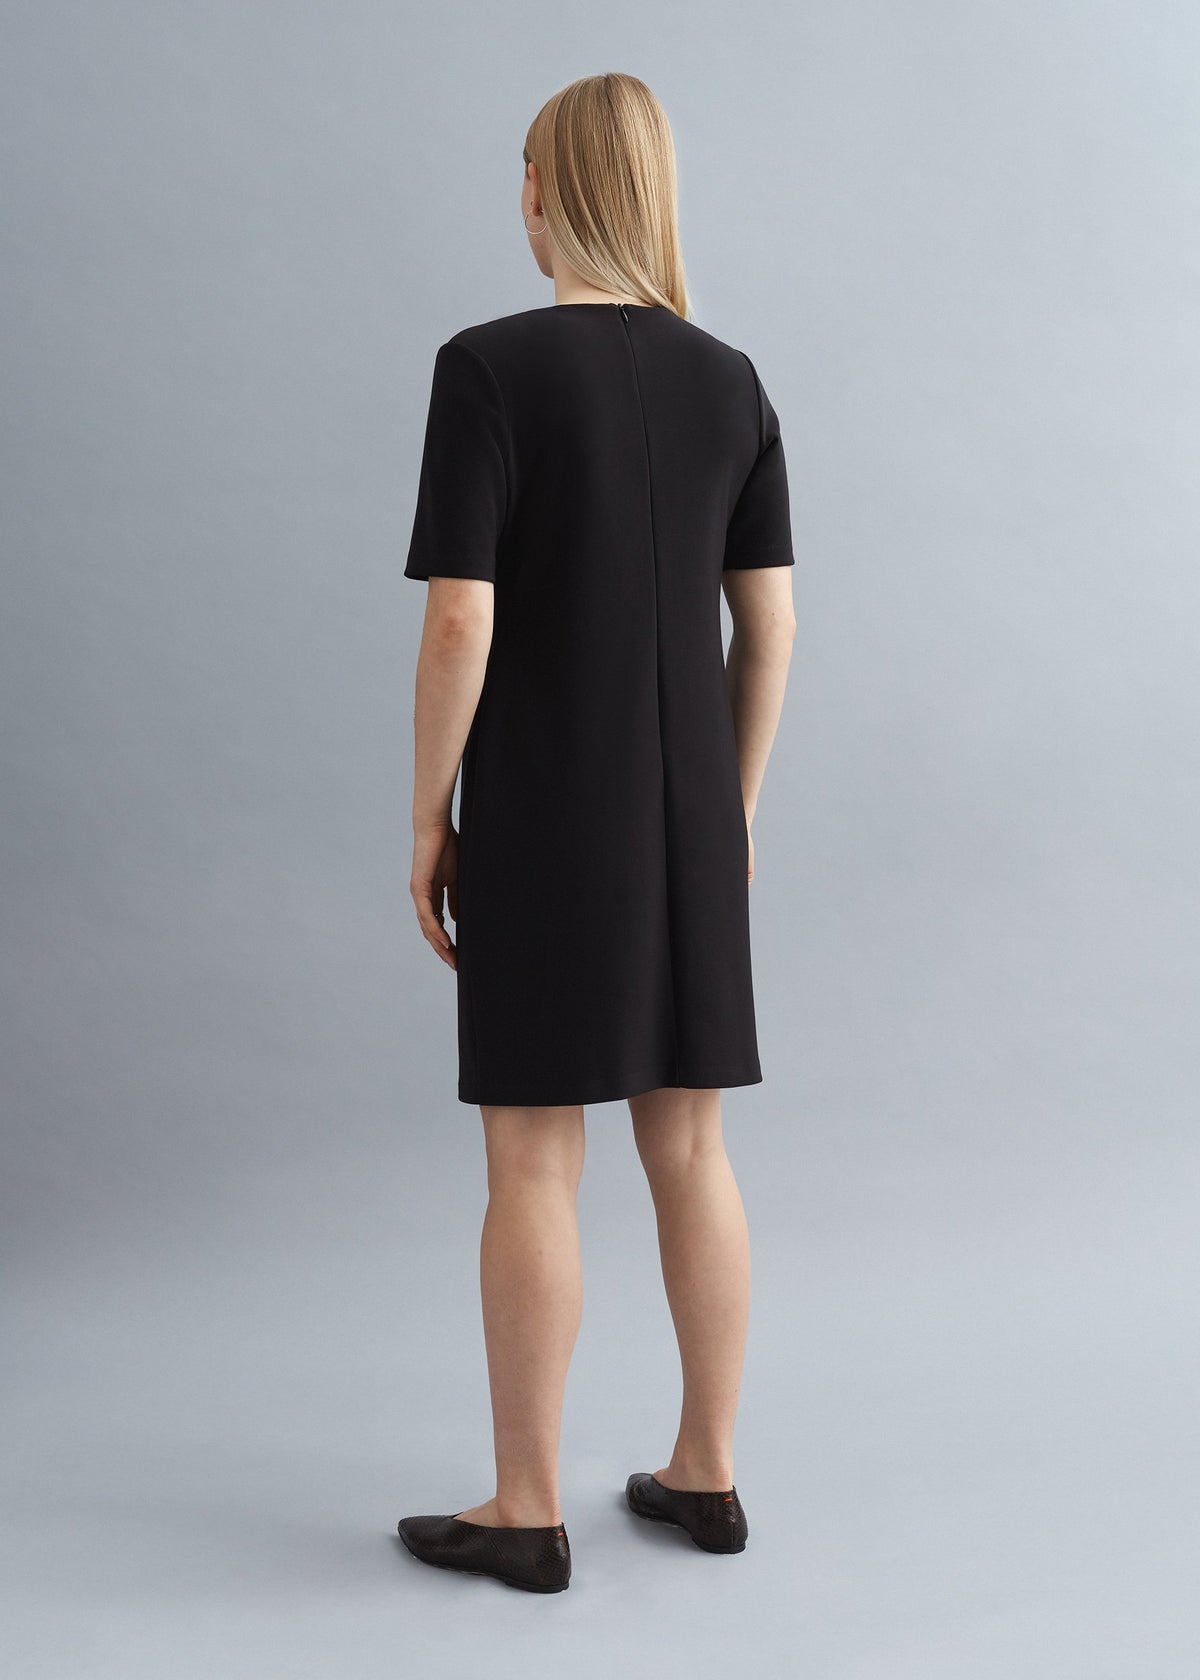 MORELLE. Asymmetric buttoned dress. Black